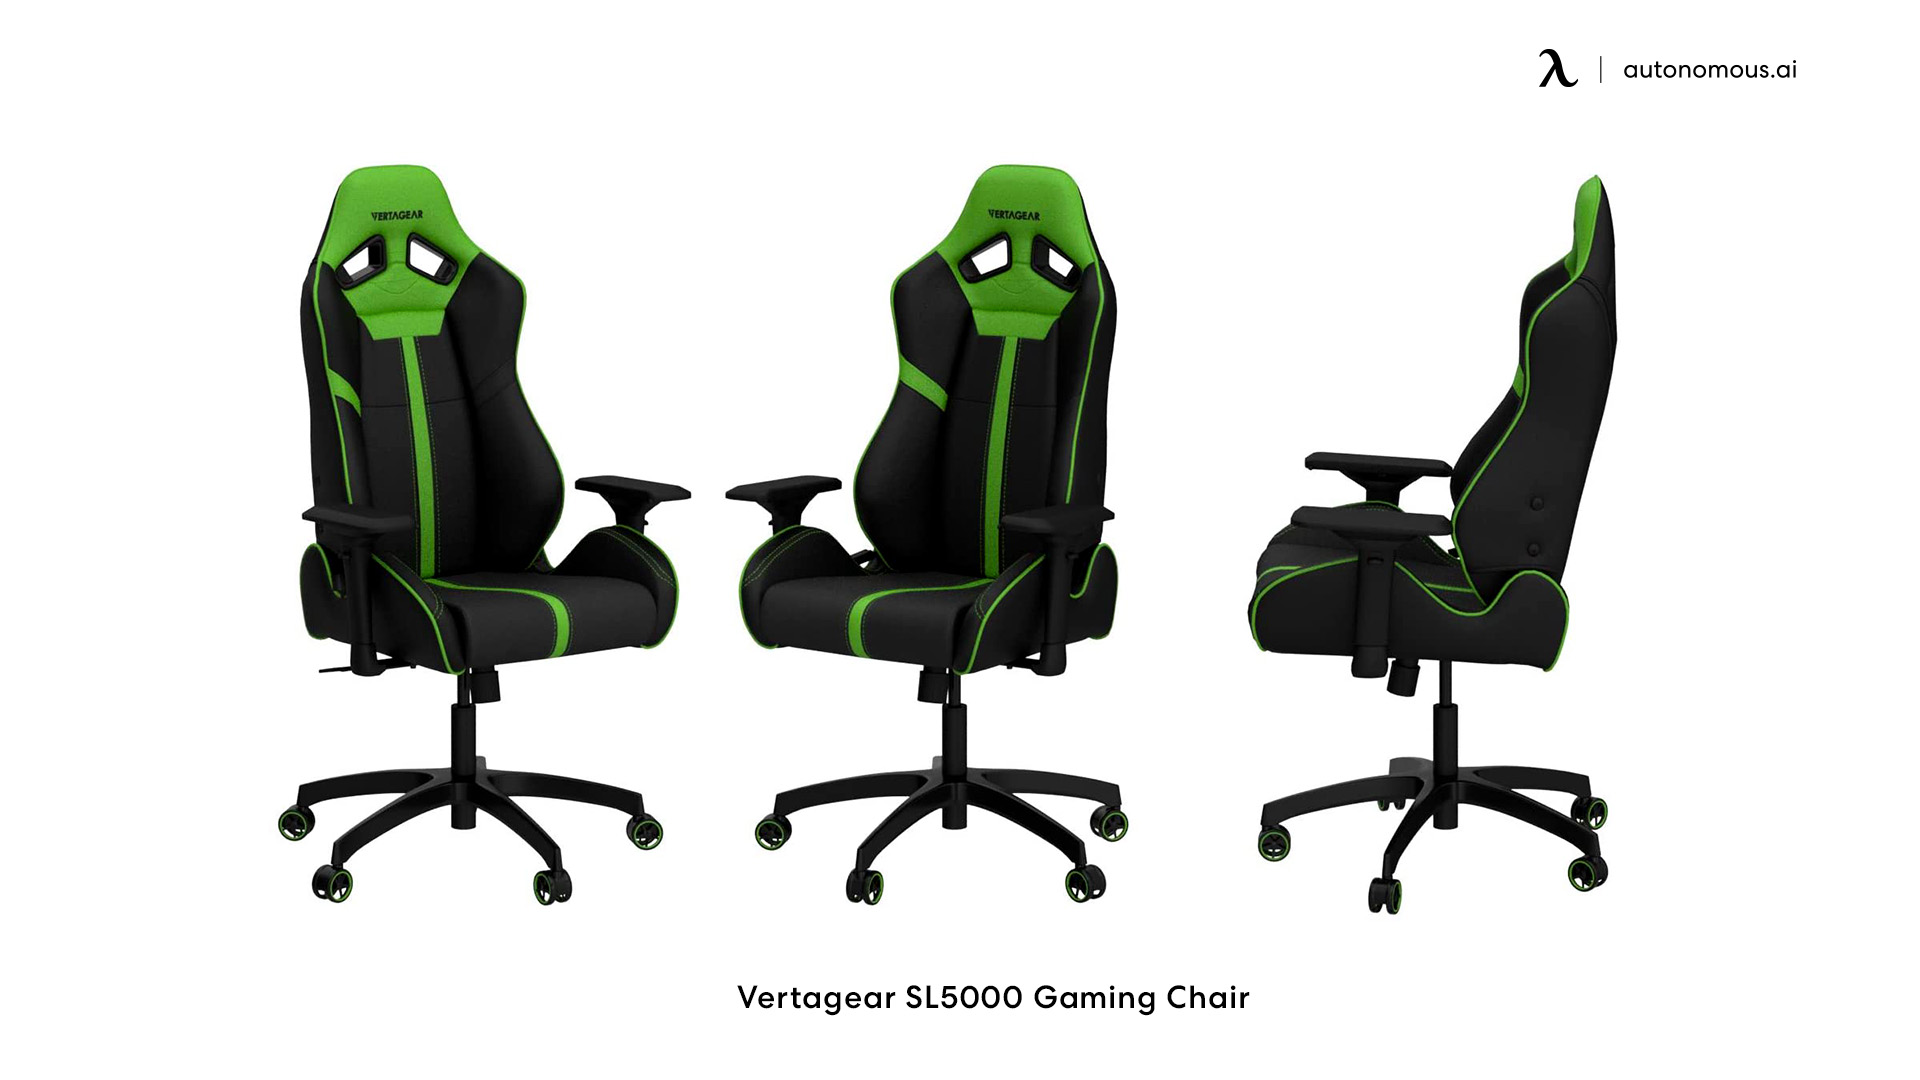 Vertagear Gaming Chair SL5000 heavy duty office chair